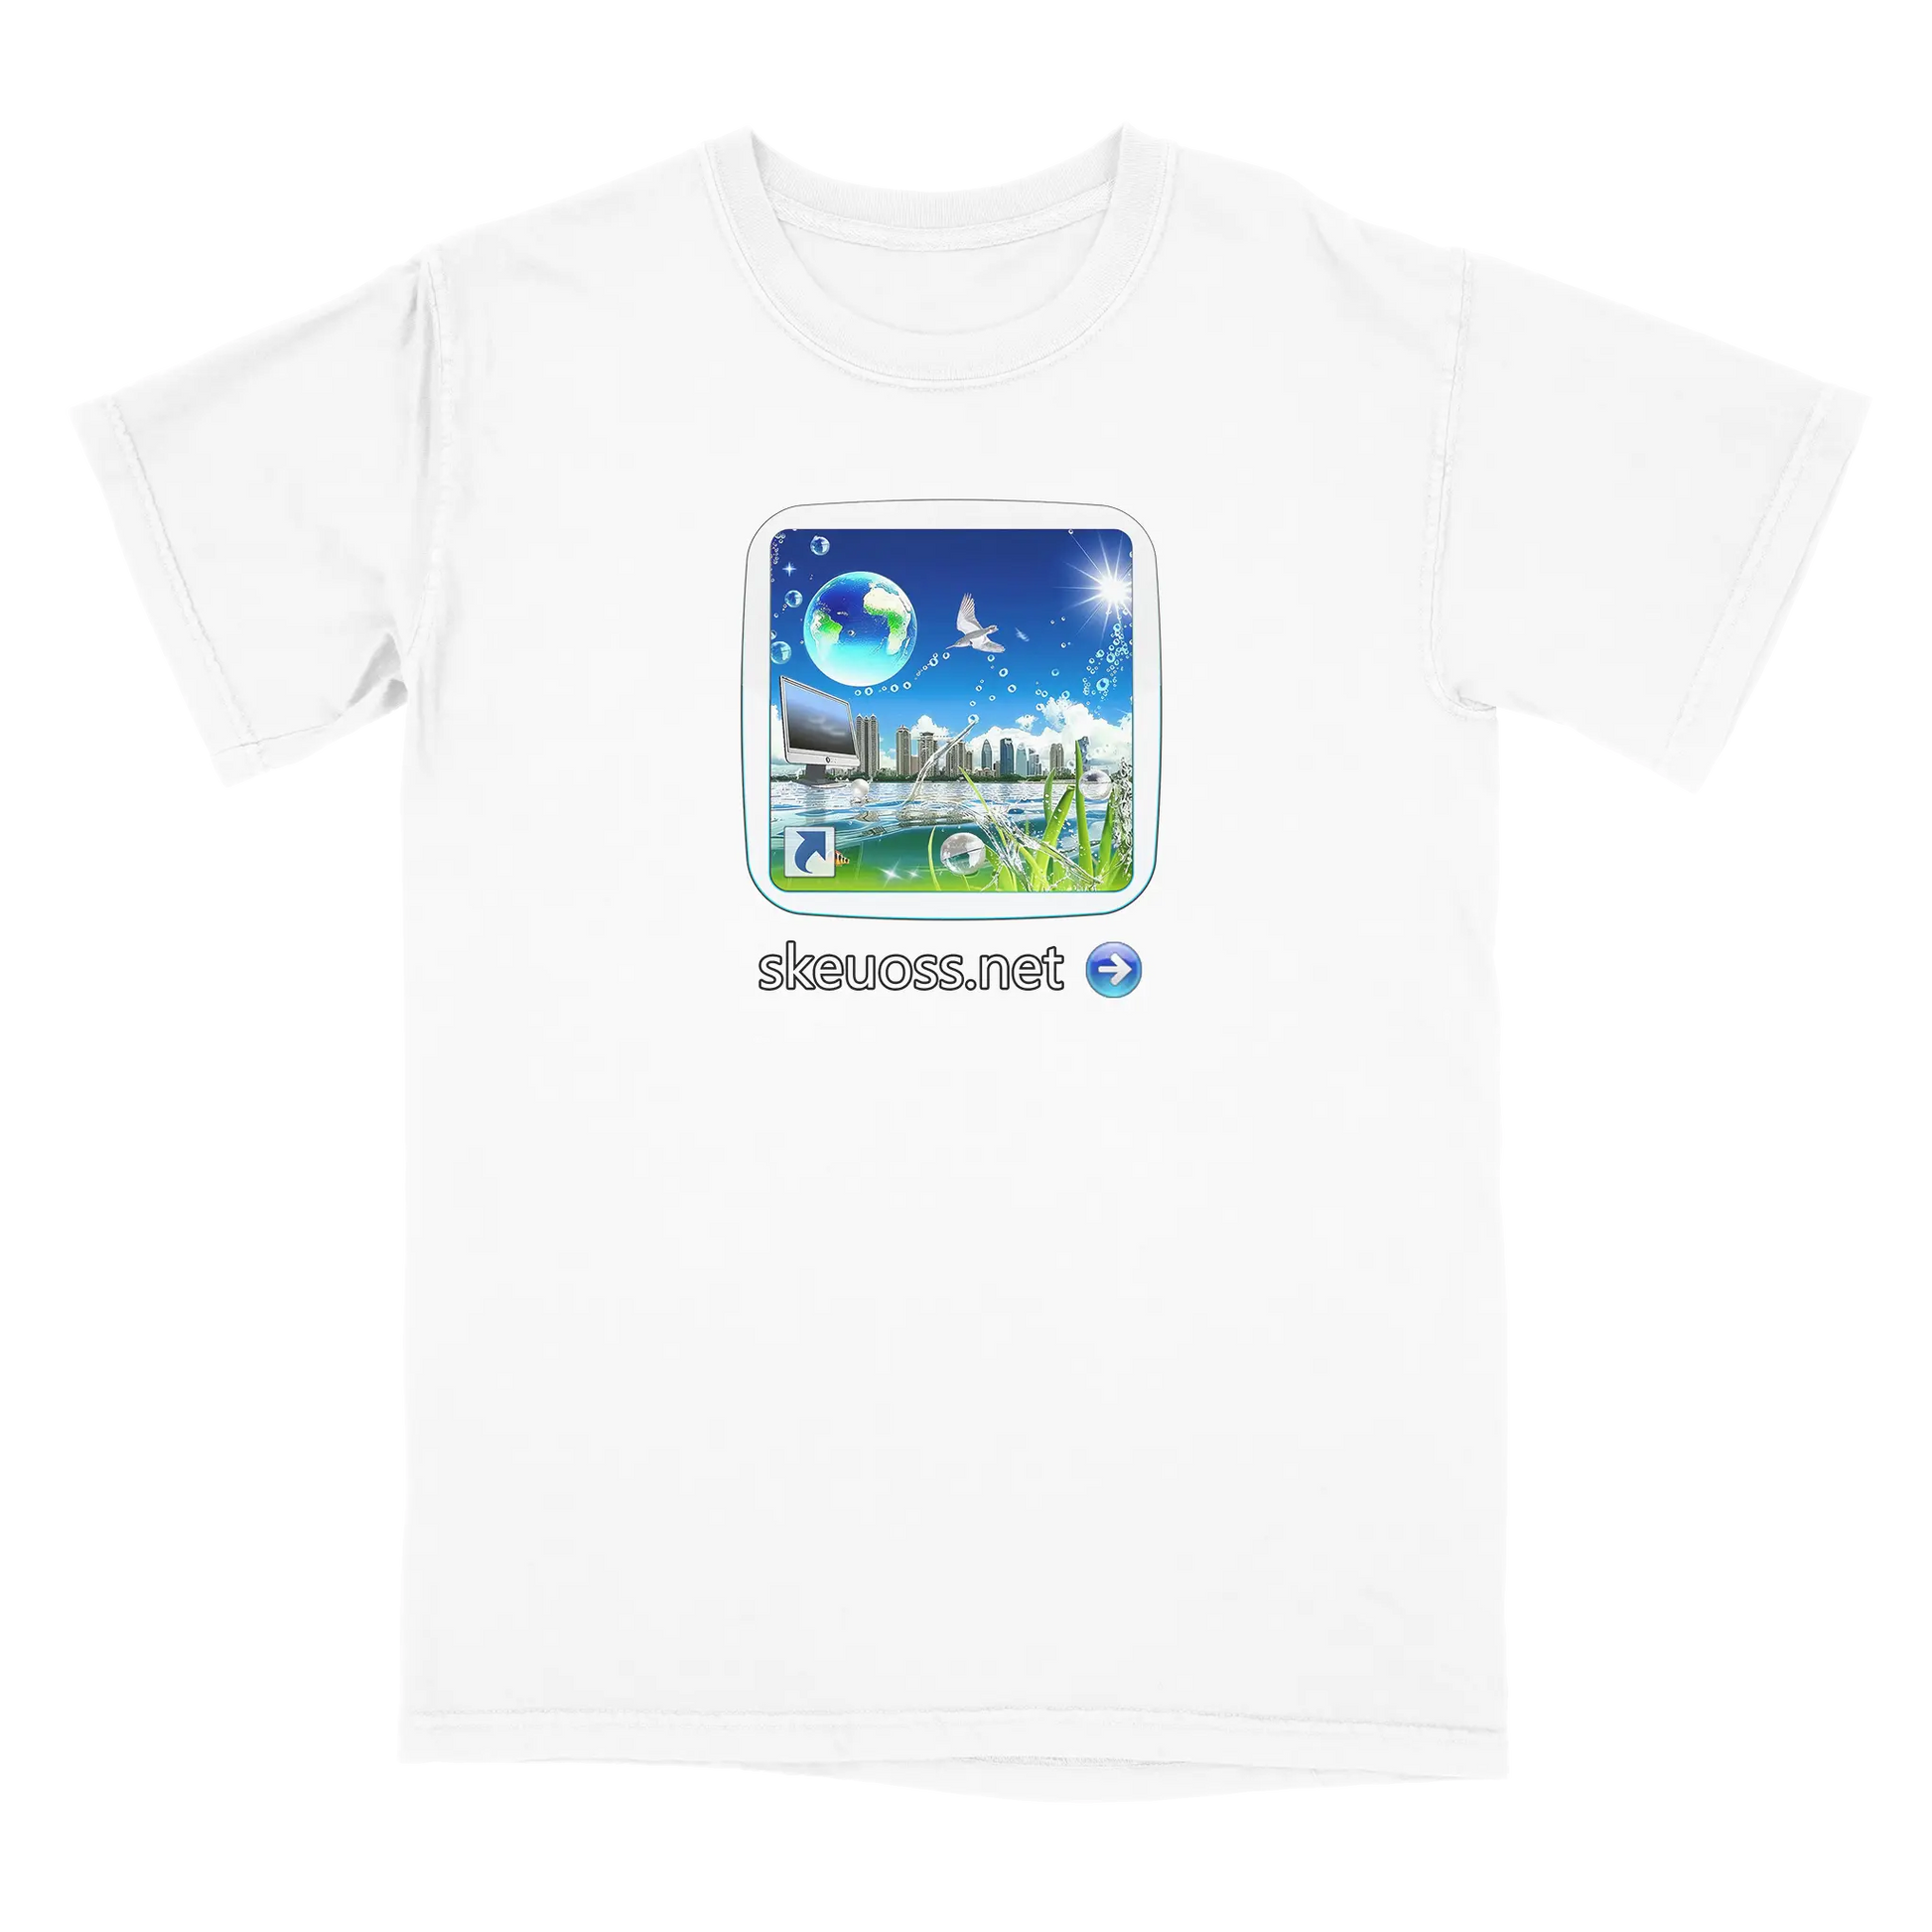 Frutiger Aero T-shirt - User Login Collection - User 392